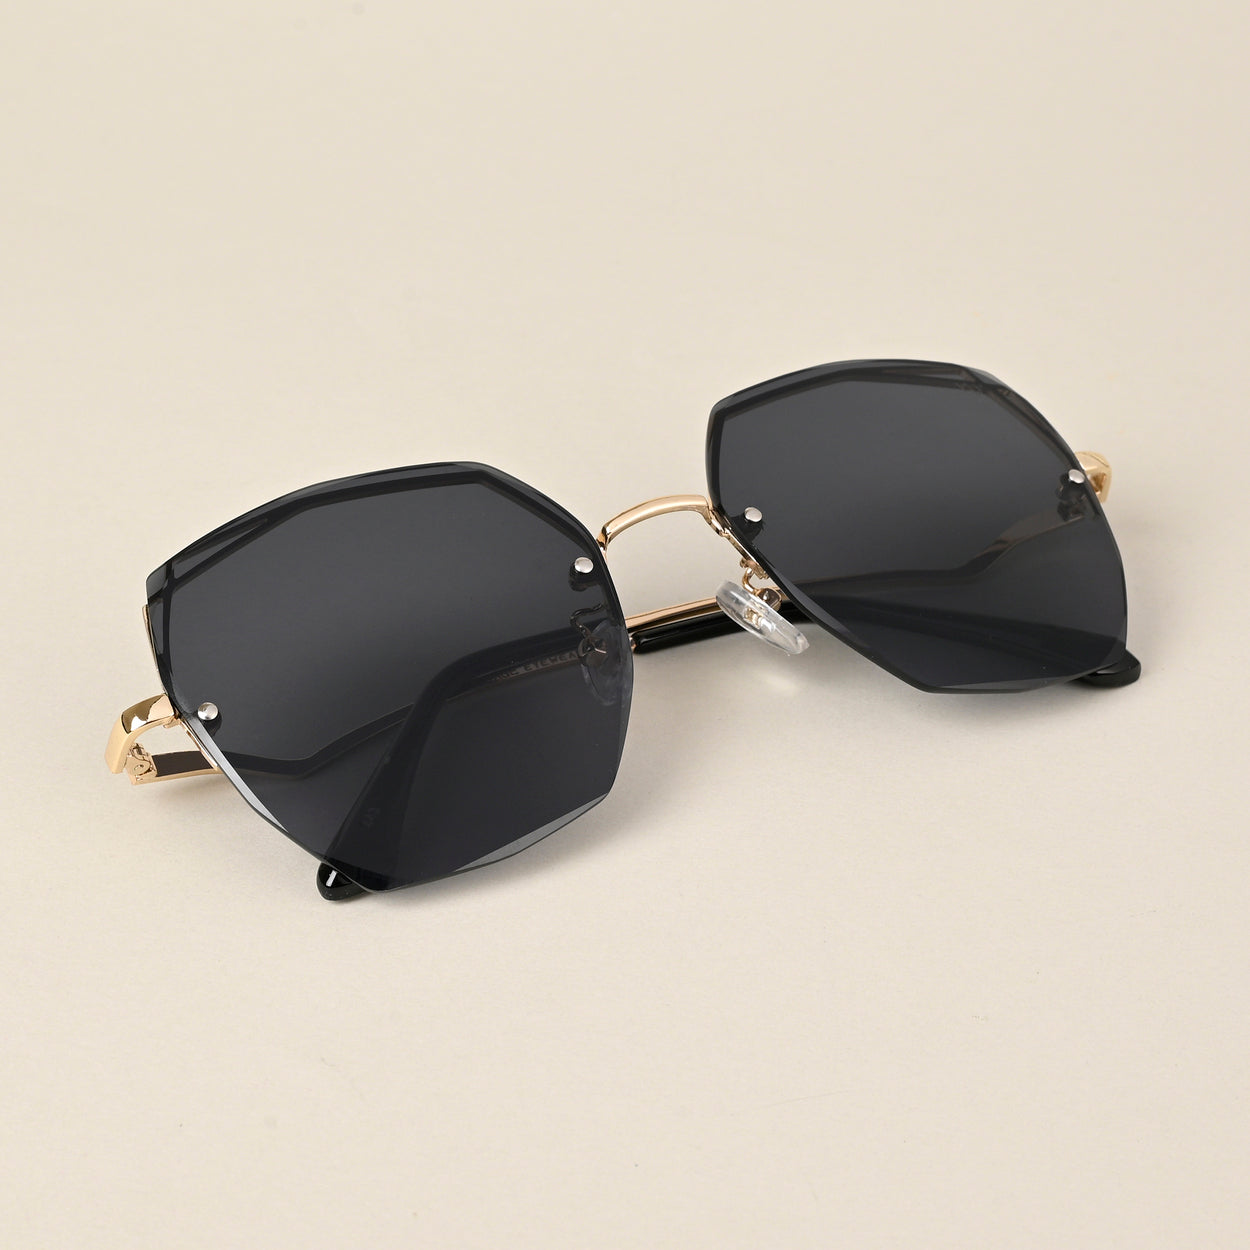 Voyage Black Geometric Sunglasses for Women - MG4334